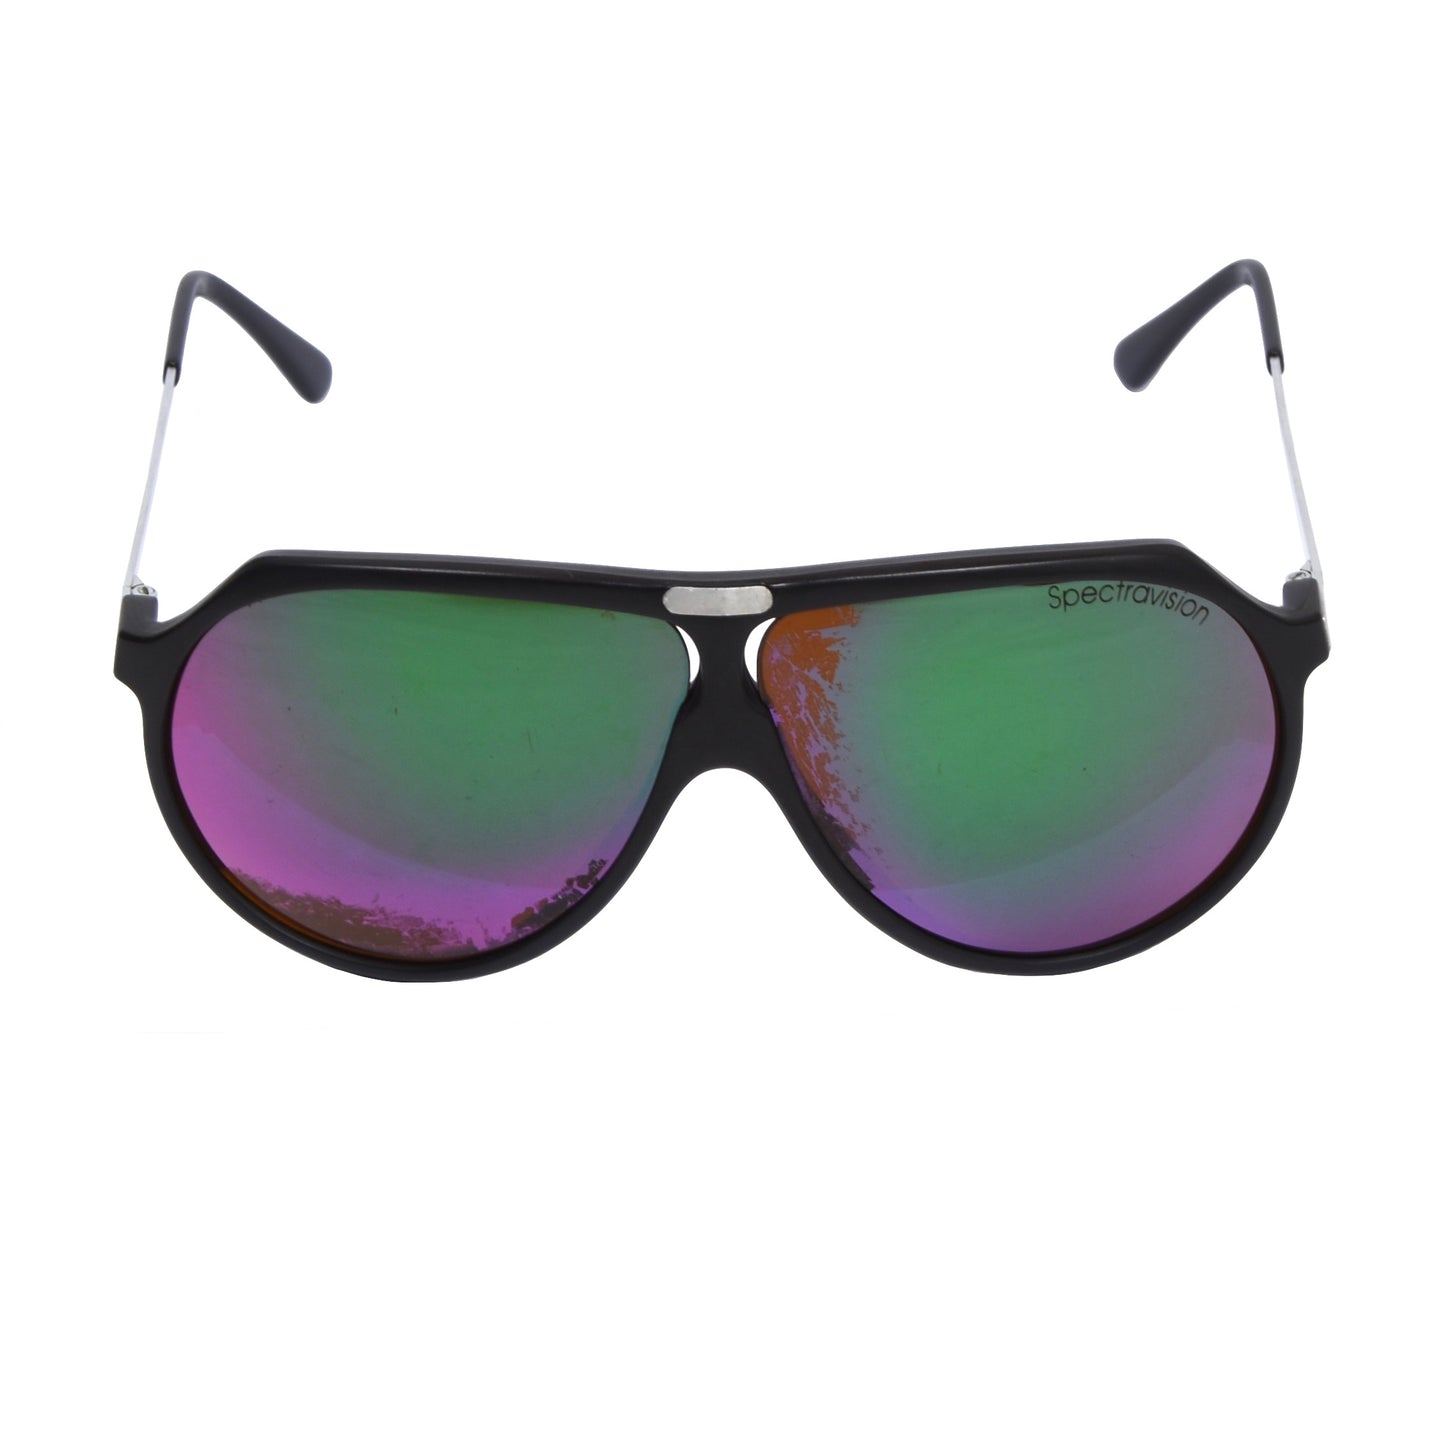 Vintage Alpina Sunglasses Mod. Profi